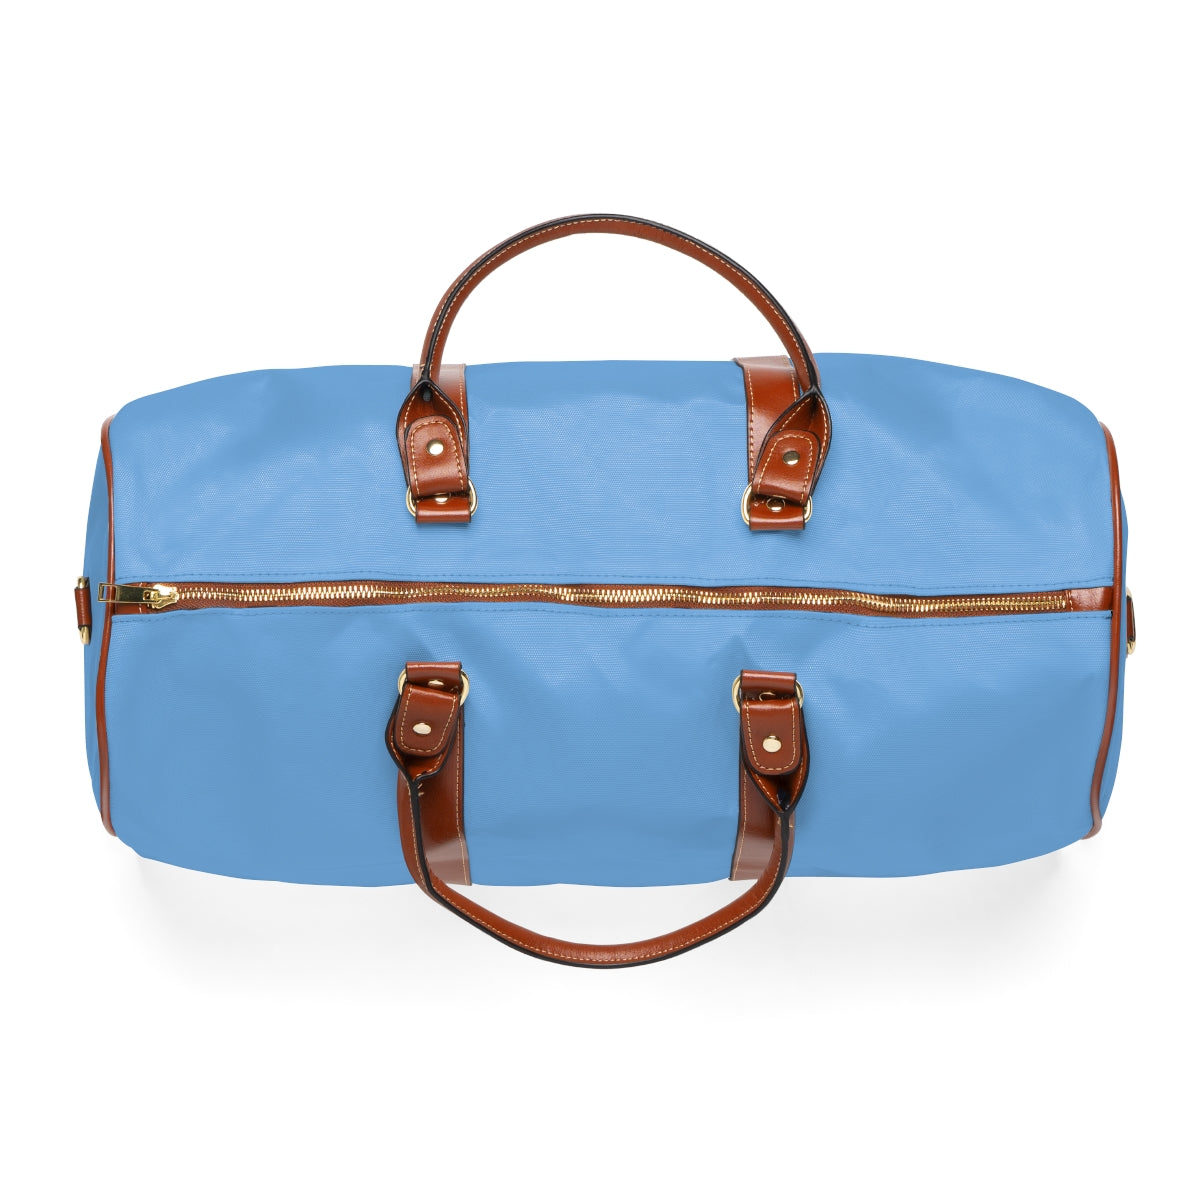 Manchester City Waterproof Travel Bag